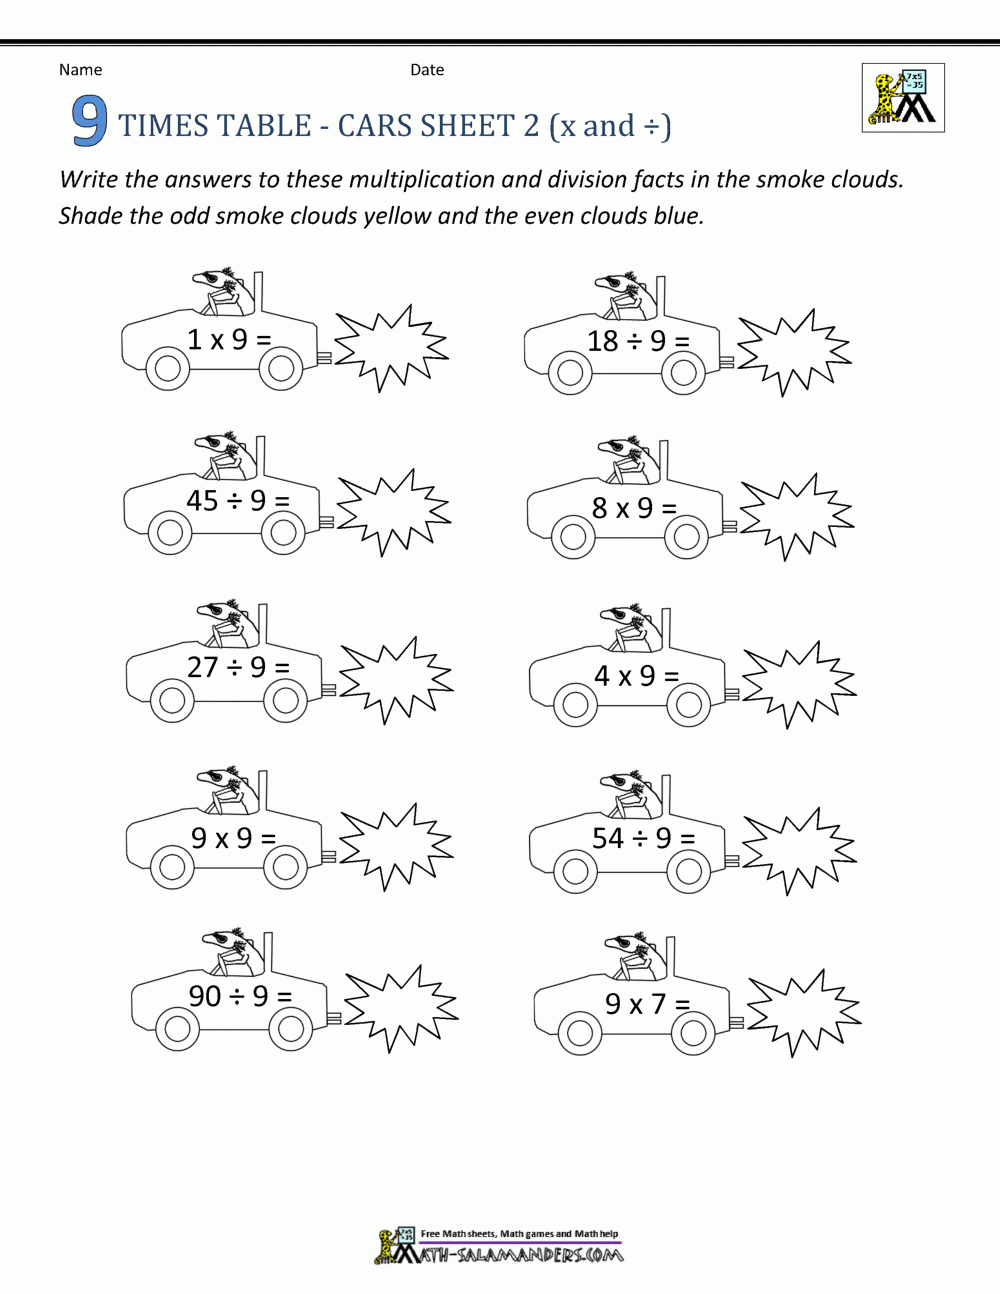 multiplication-worksheets-x9-printable-multiplication-flash-cards